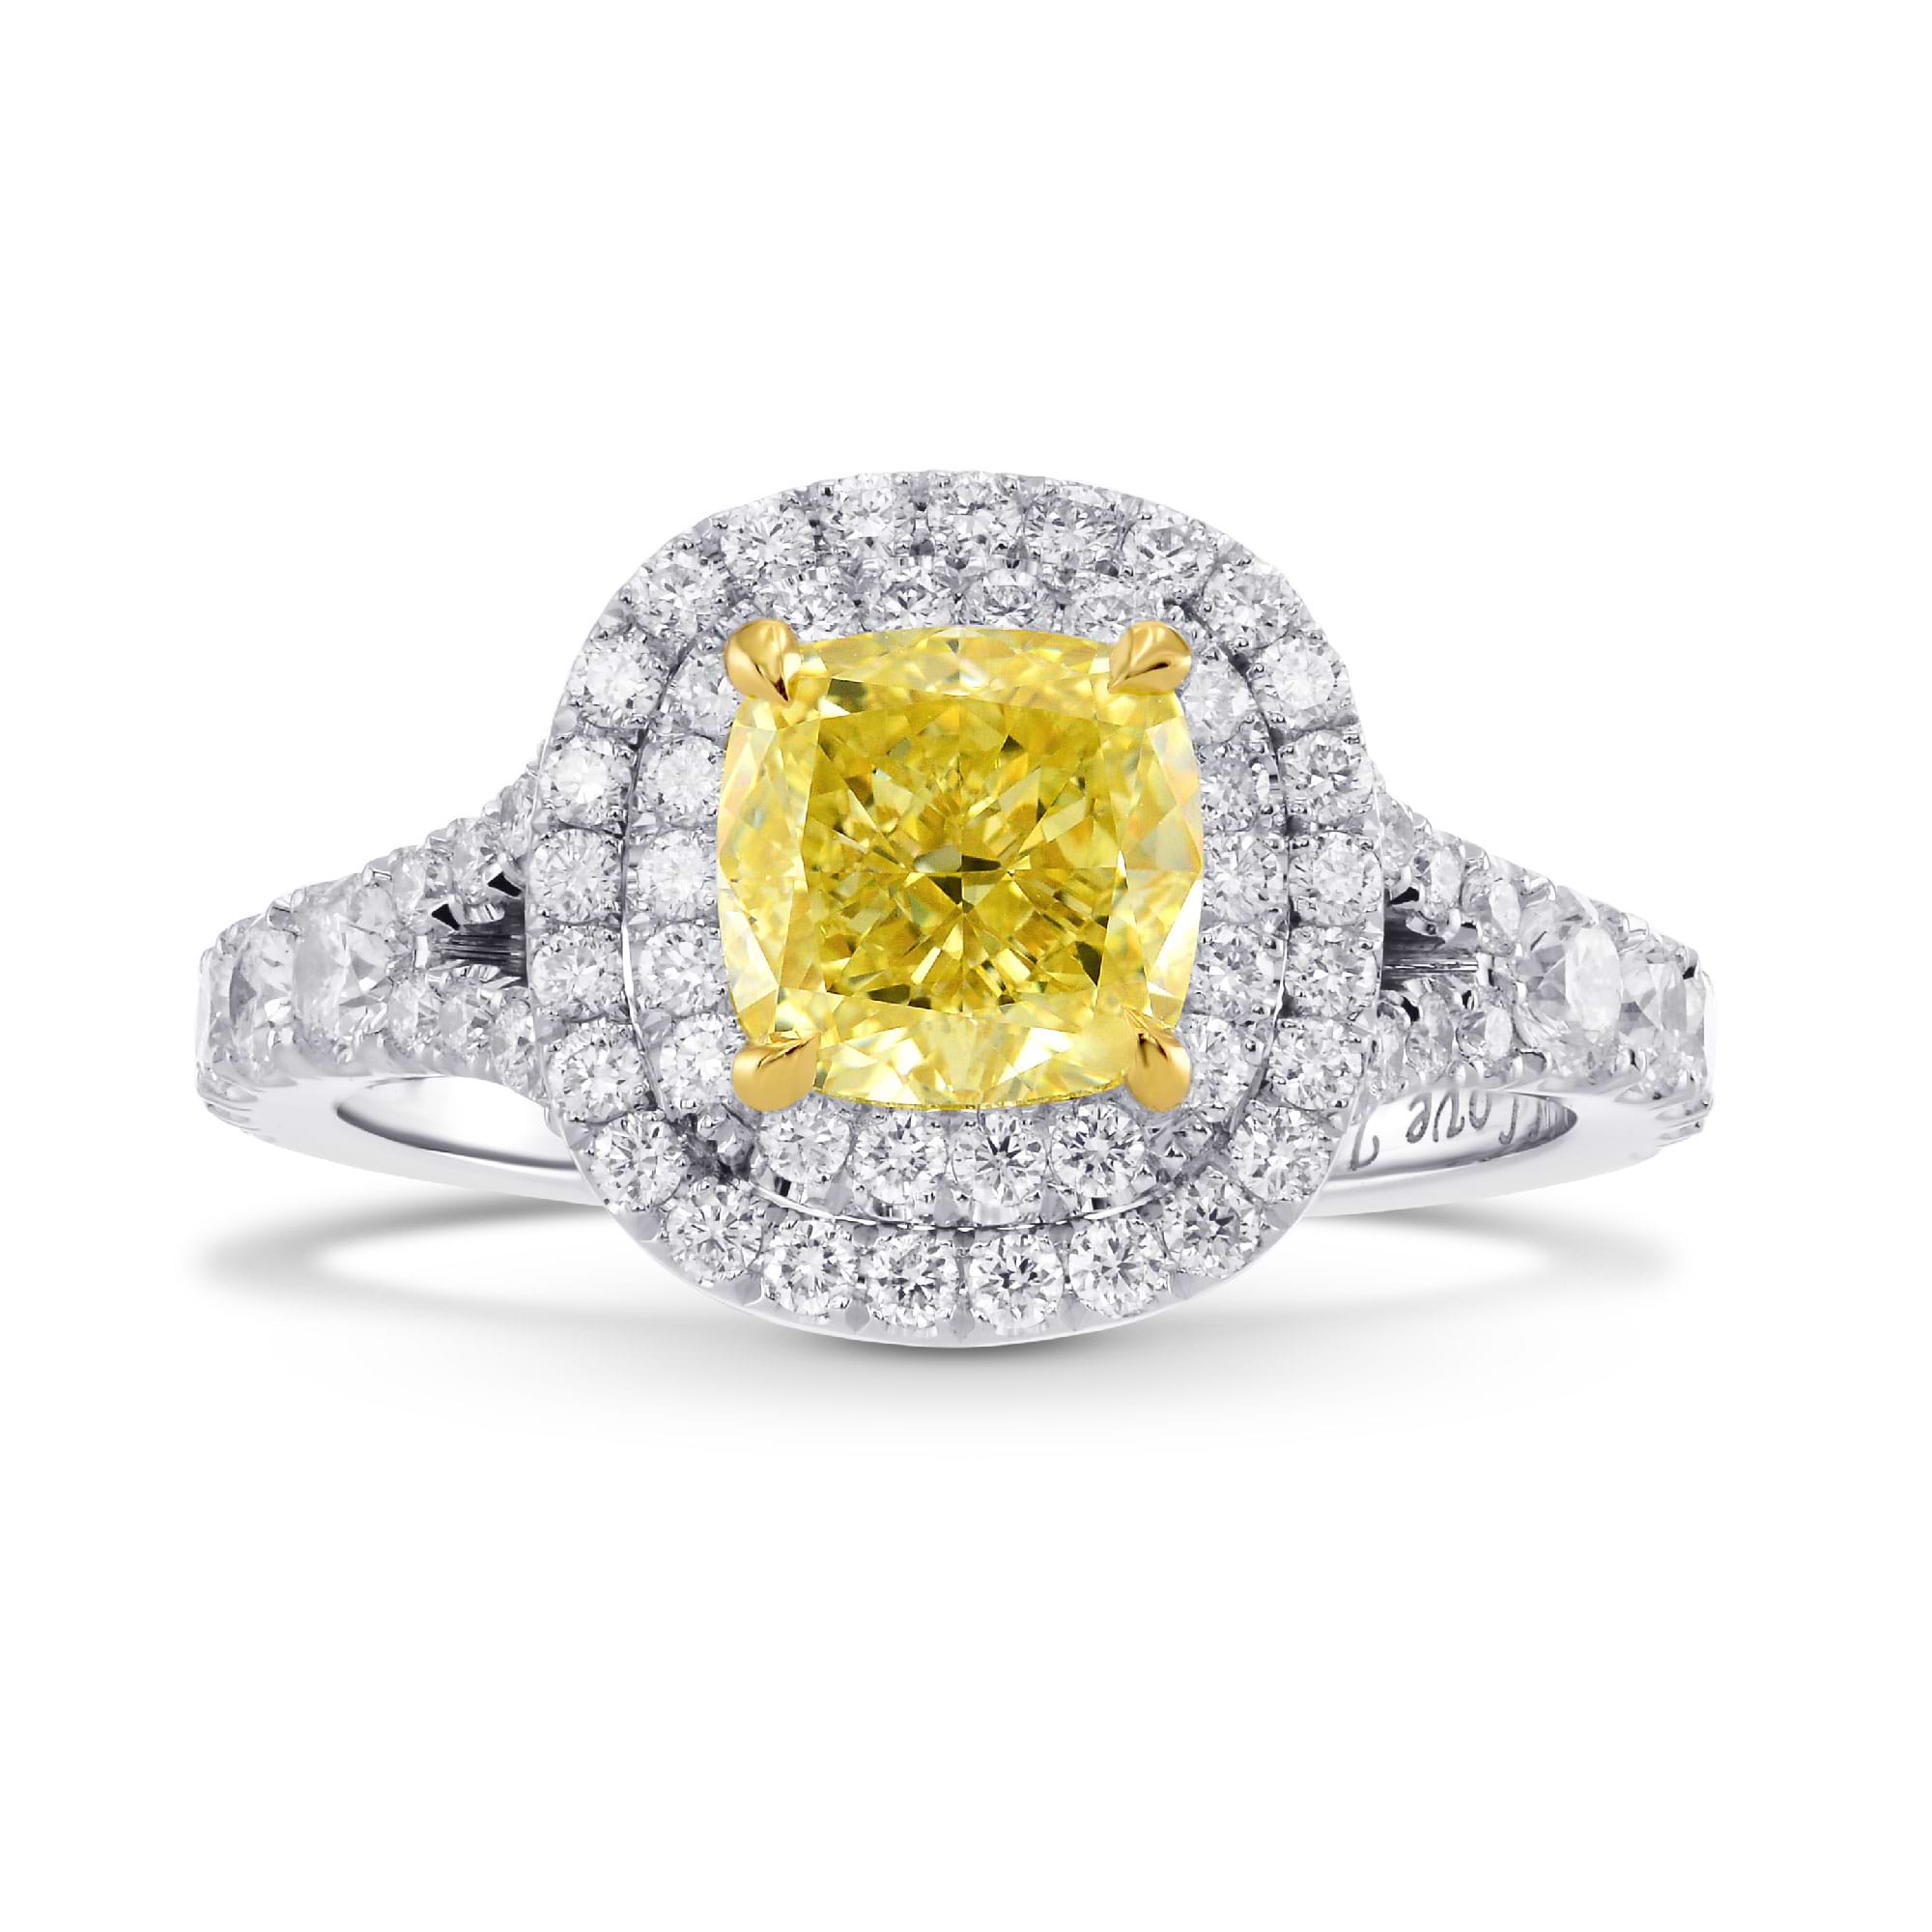 Fancy Intense Yellow Cushion Diamond Ring, SKU 281737 (2.19Ct TW)